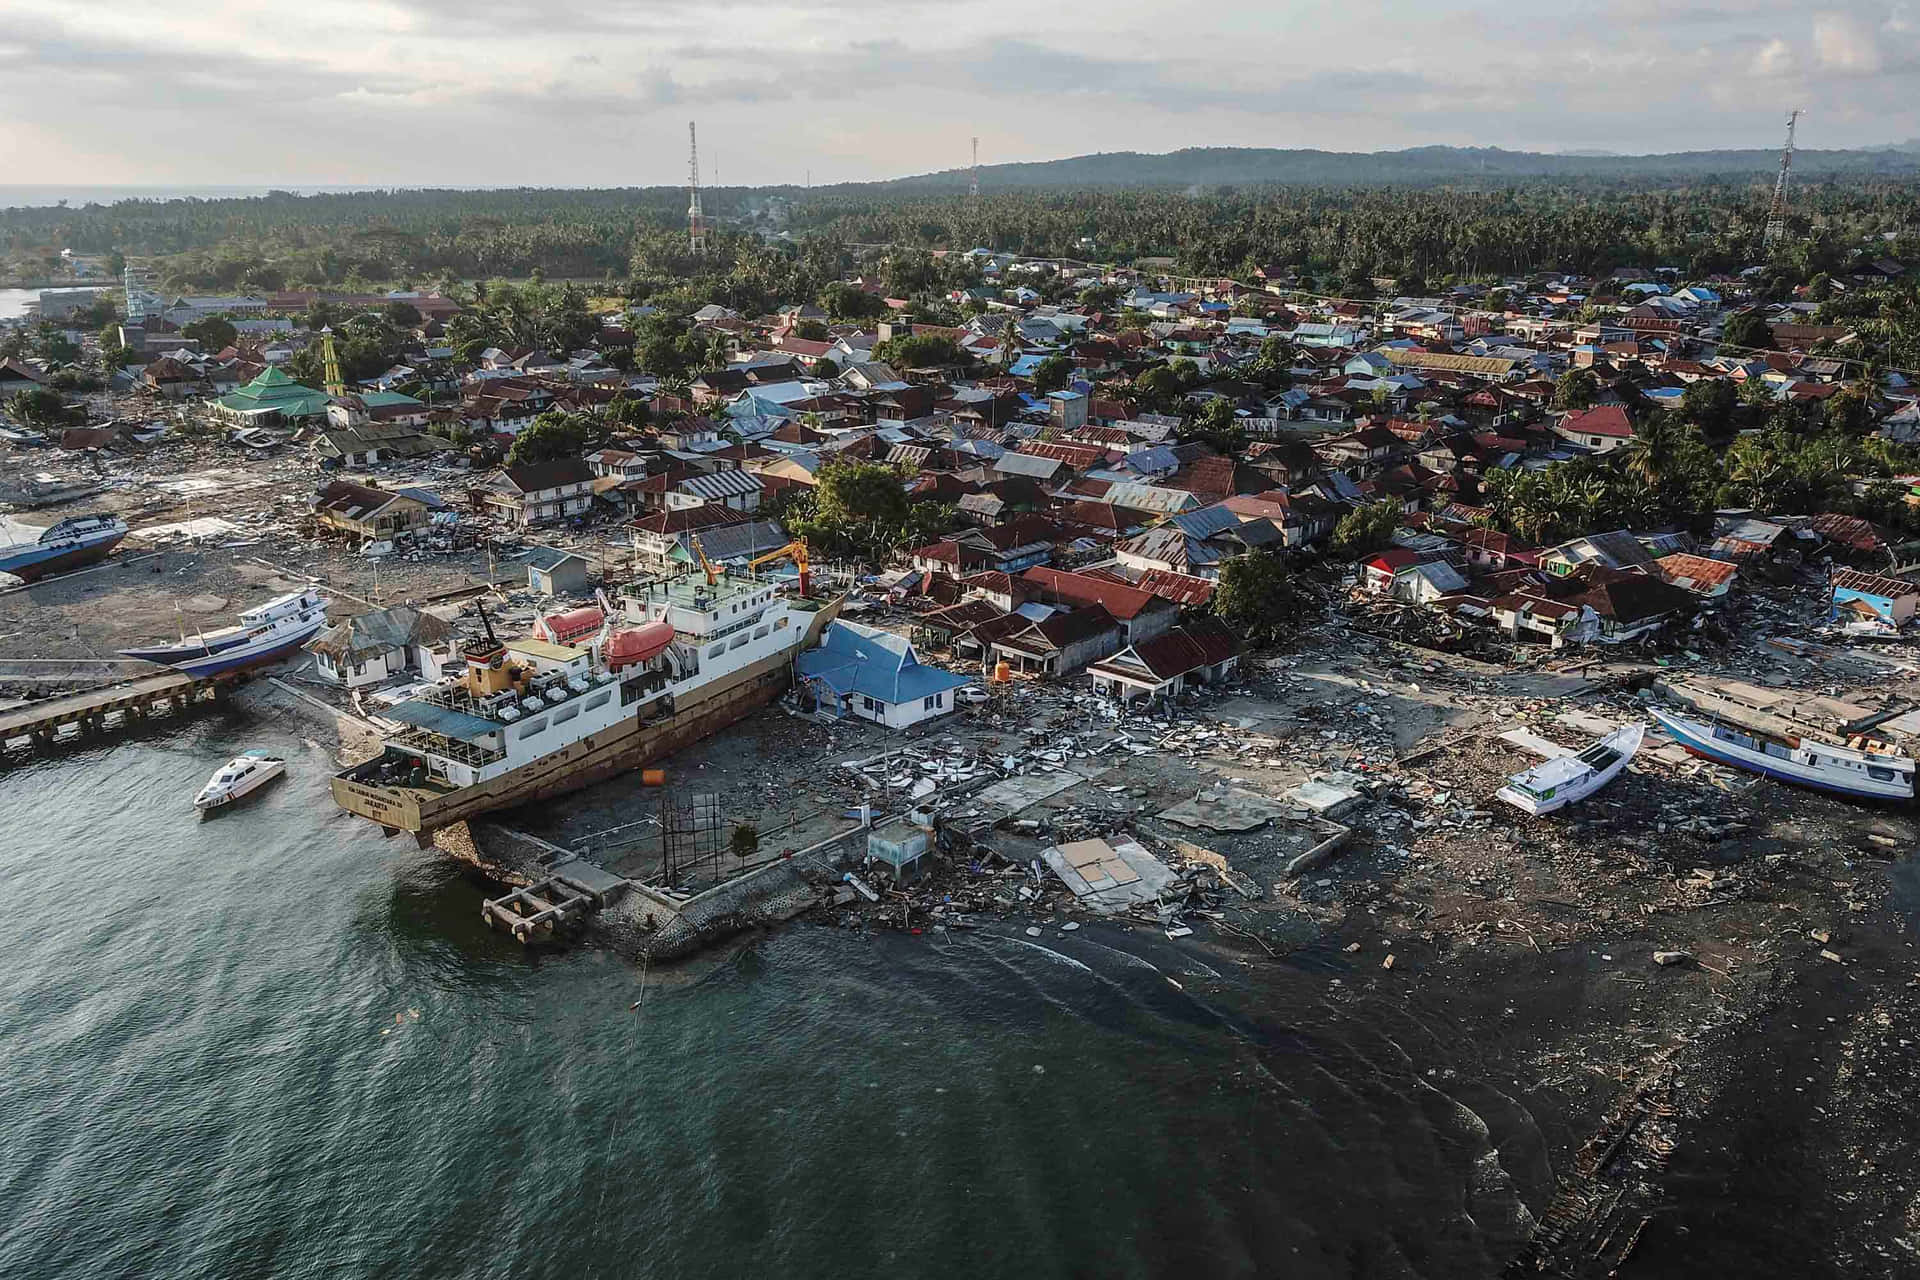 The power of a Tsunami makes this shoreline unrecognizable